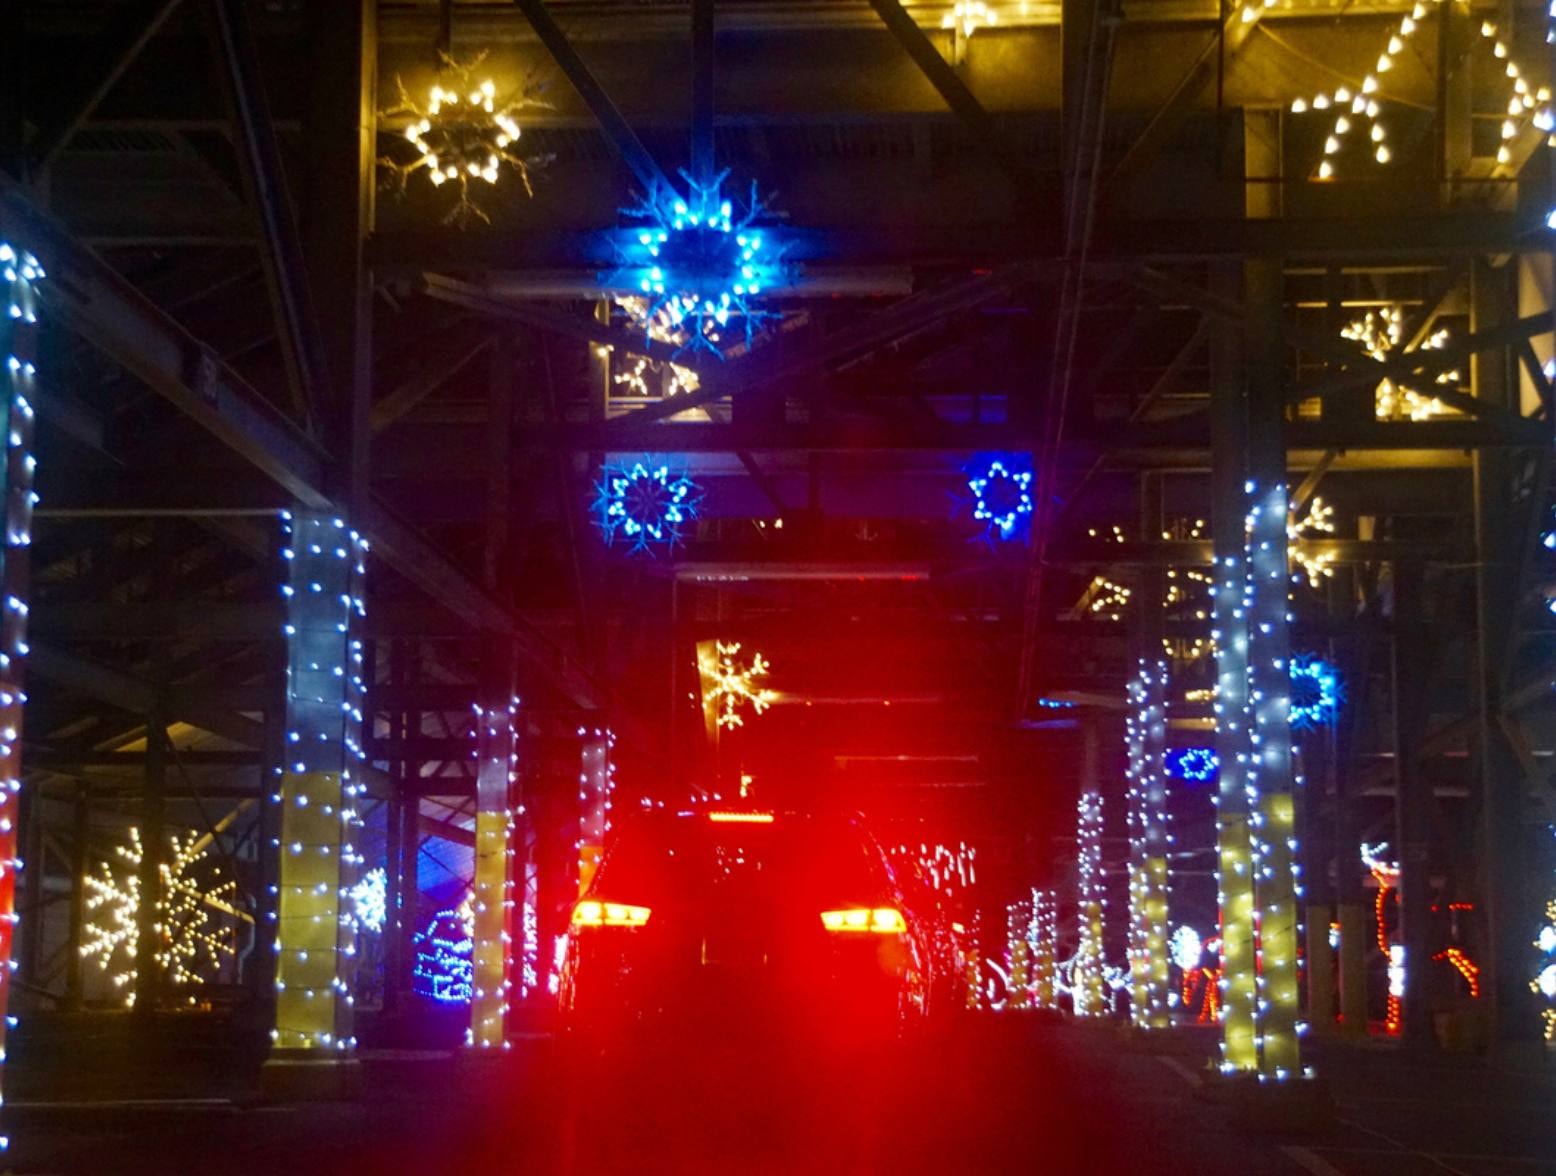 Drive-through Christmas lights display at night